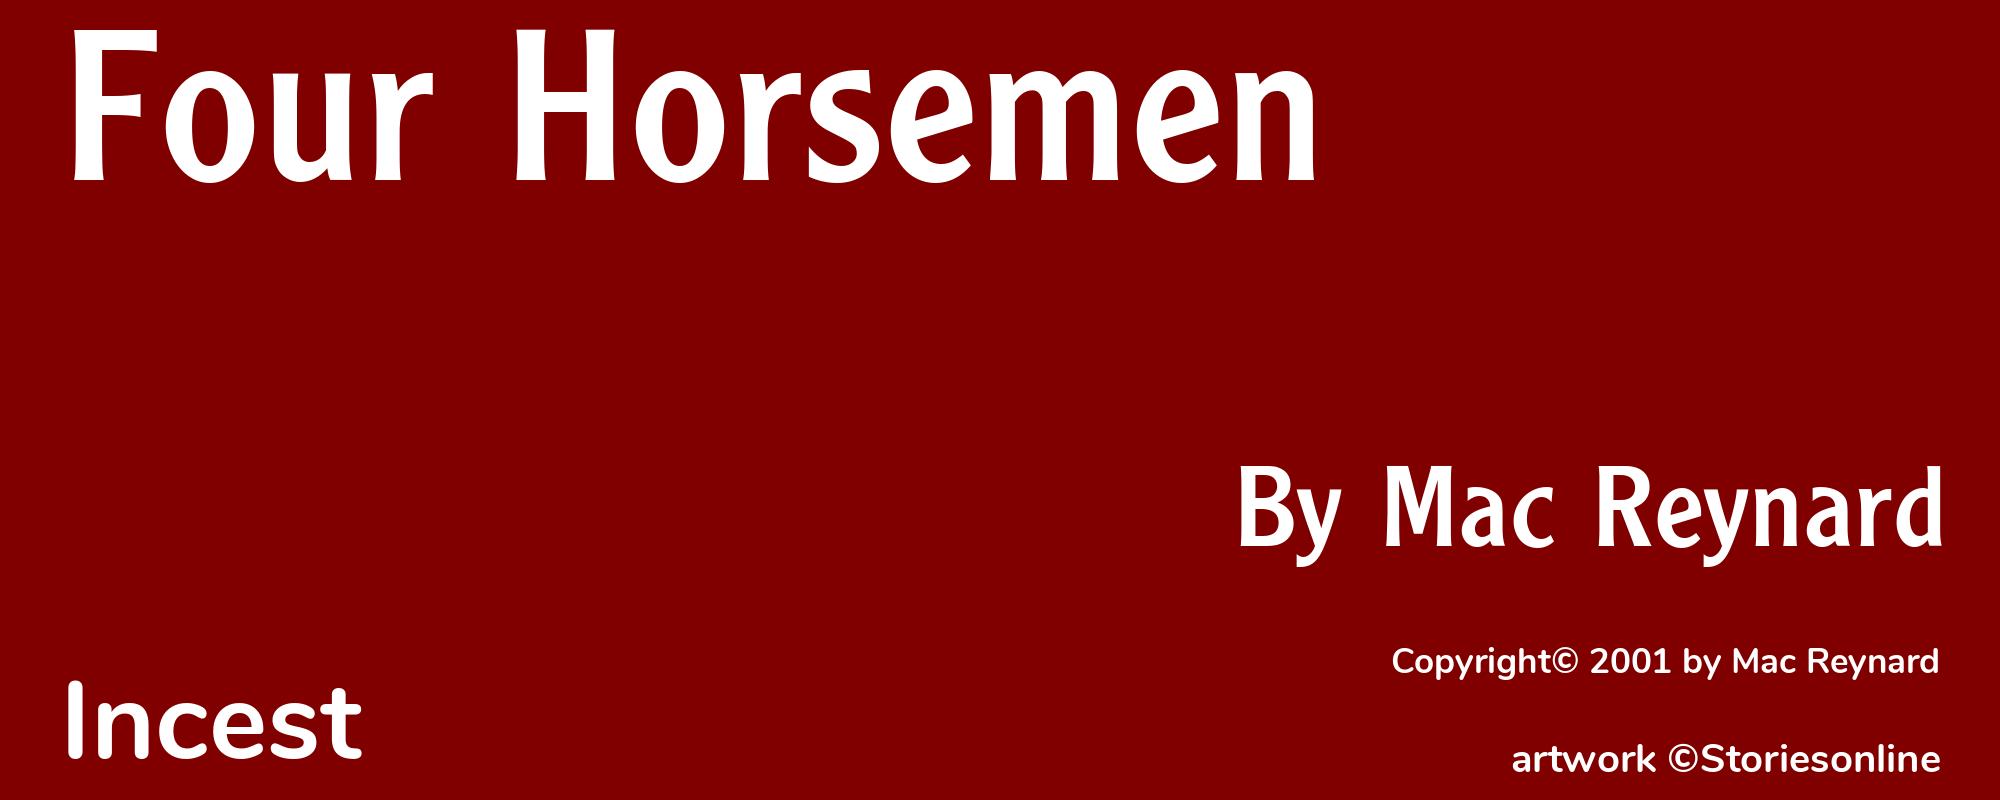 Four Horsemen - Cover